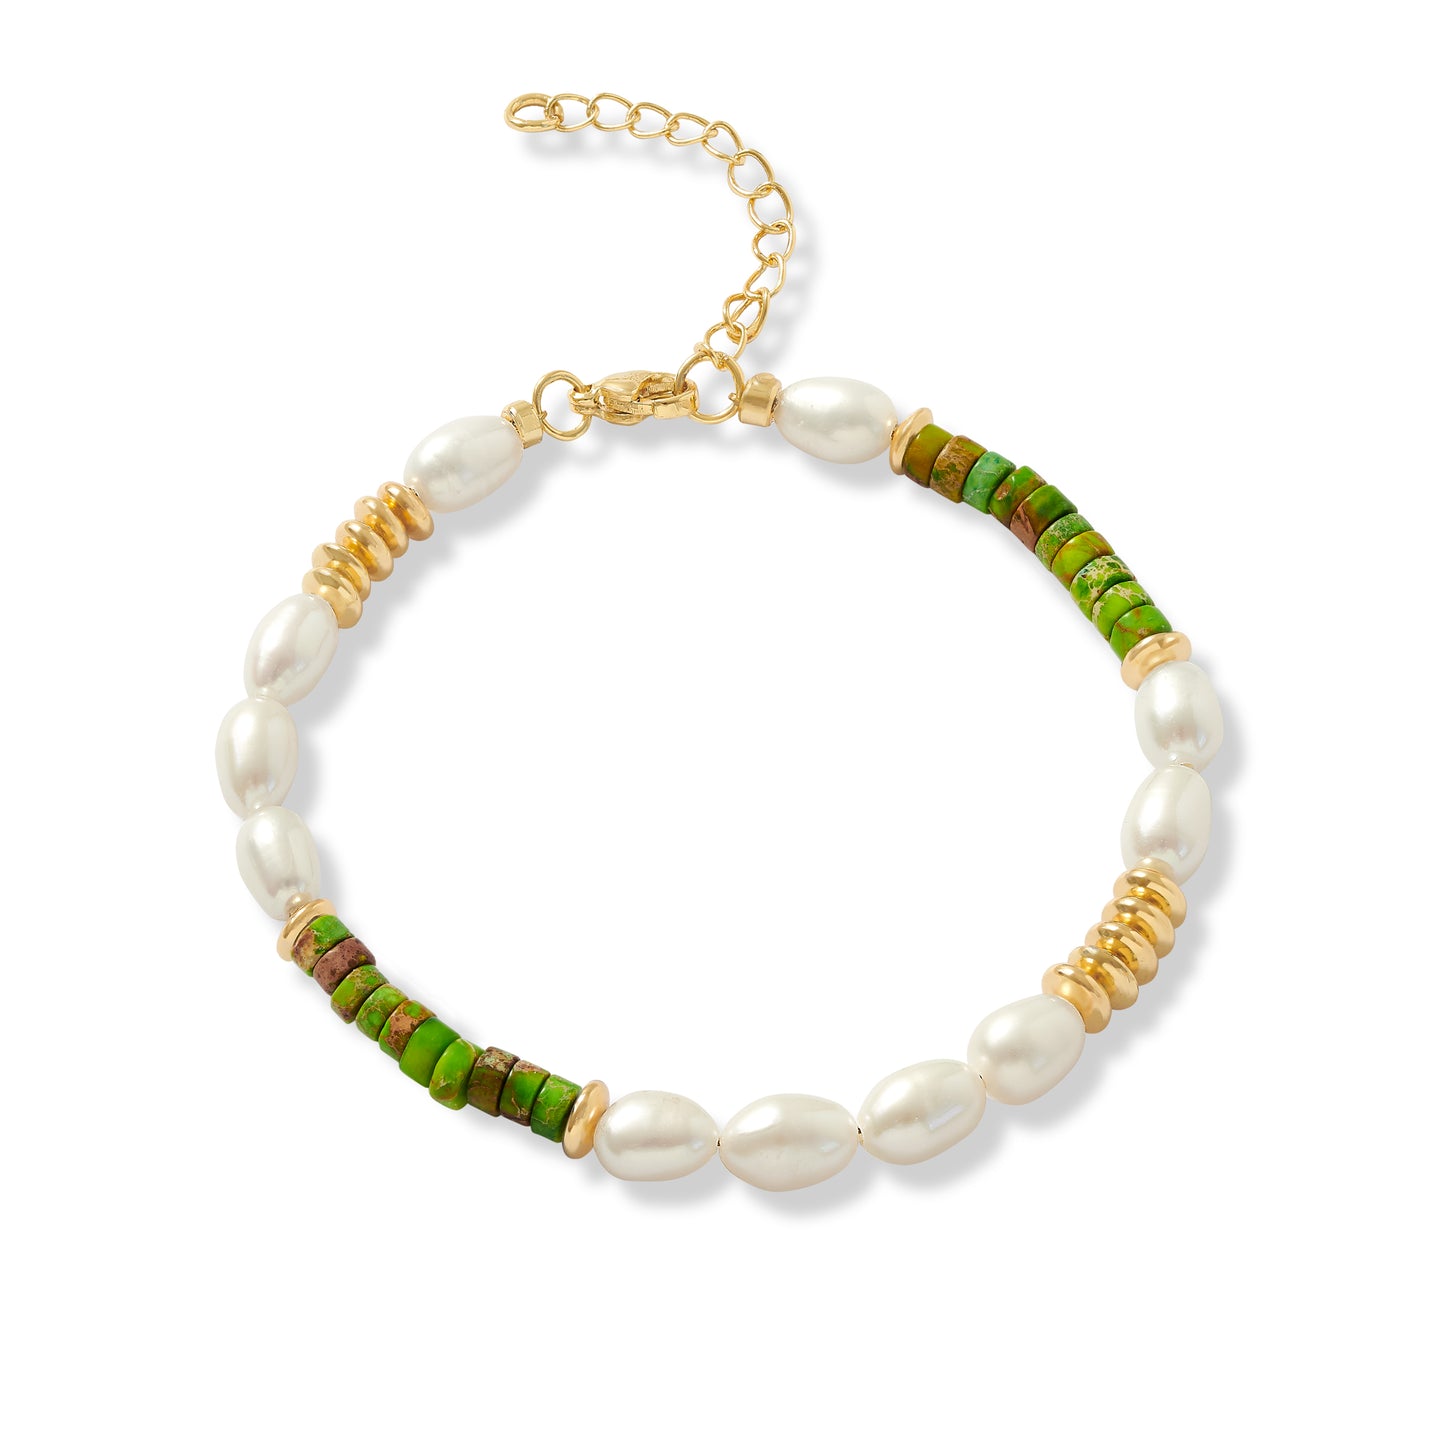 Nova oval cultured freshwater pearl bracelet with green jasper & gold beads